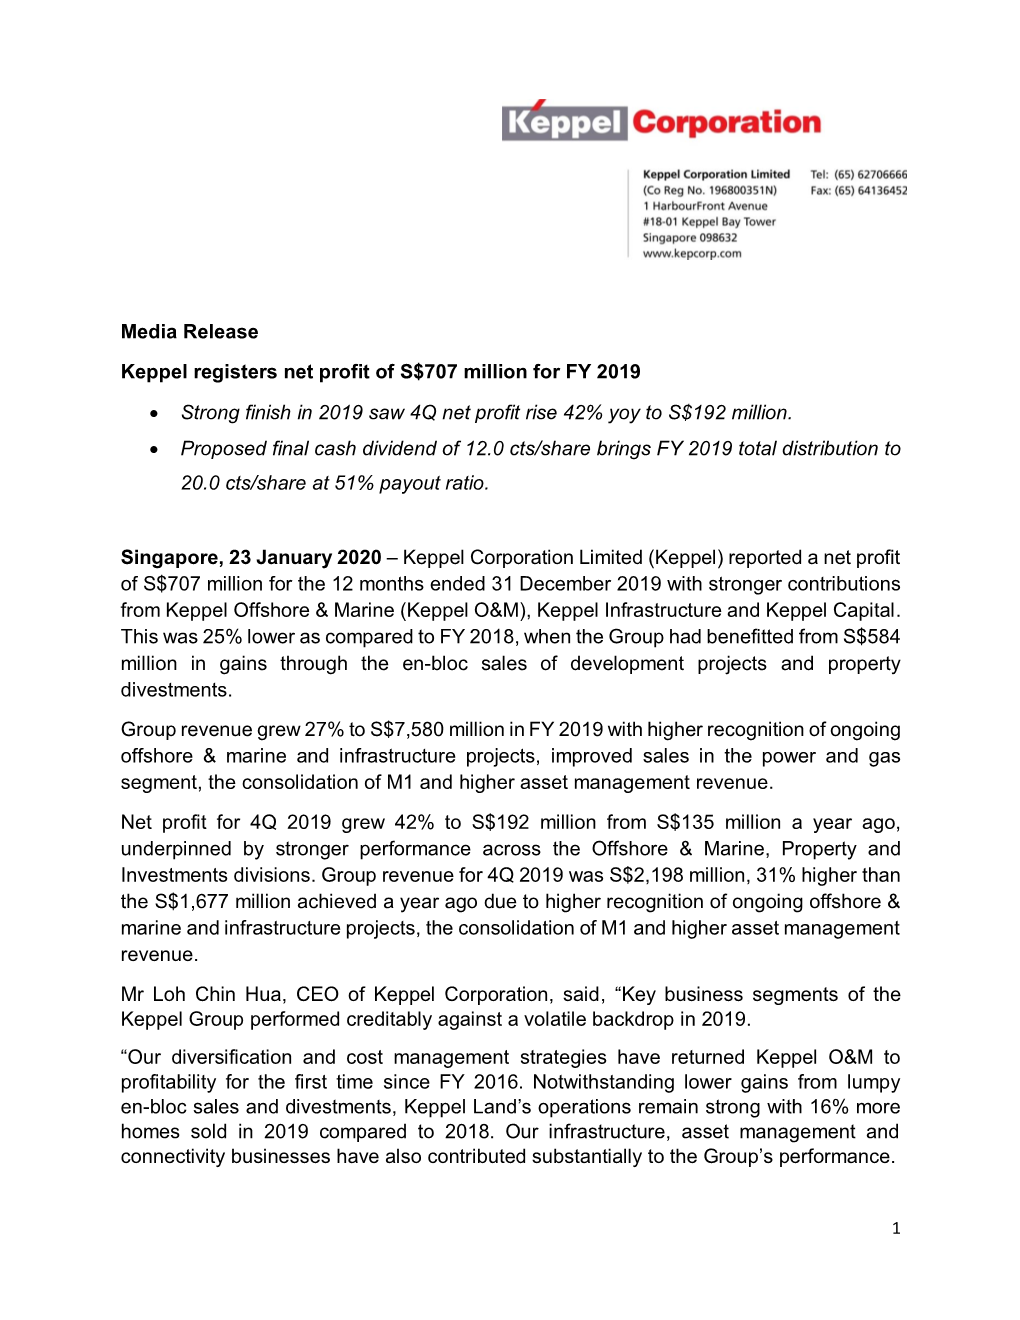 Media Release Keppel Registers Net Profit of S$707 Million for FY 2019